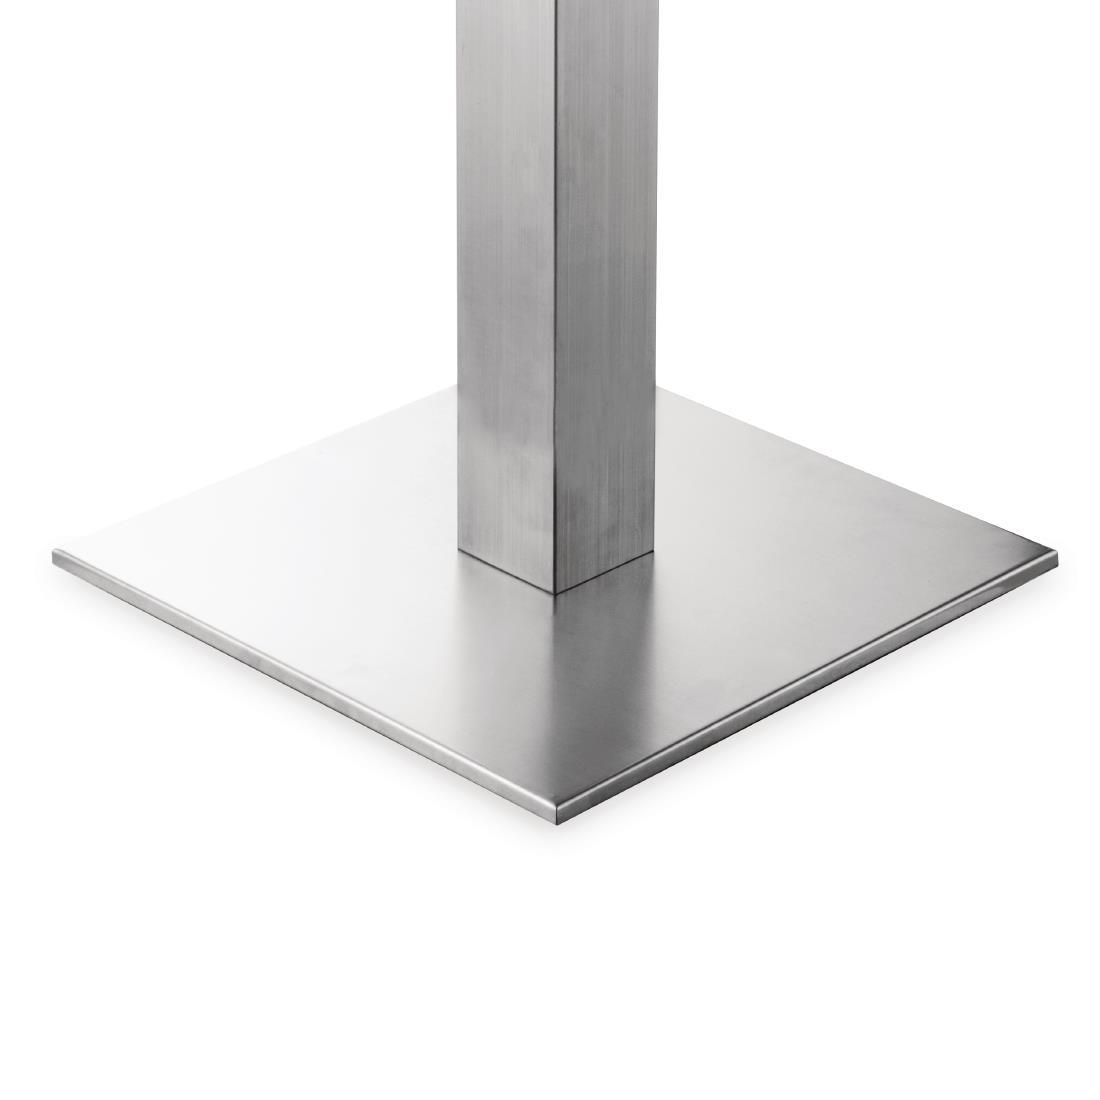 Bolero Stainless Steel Square Table Base - CF157  - 5